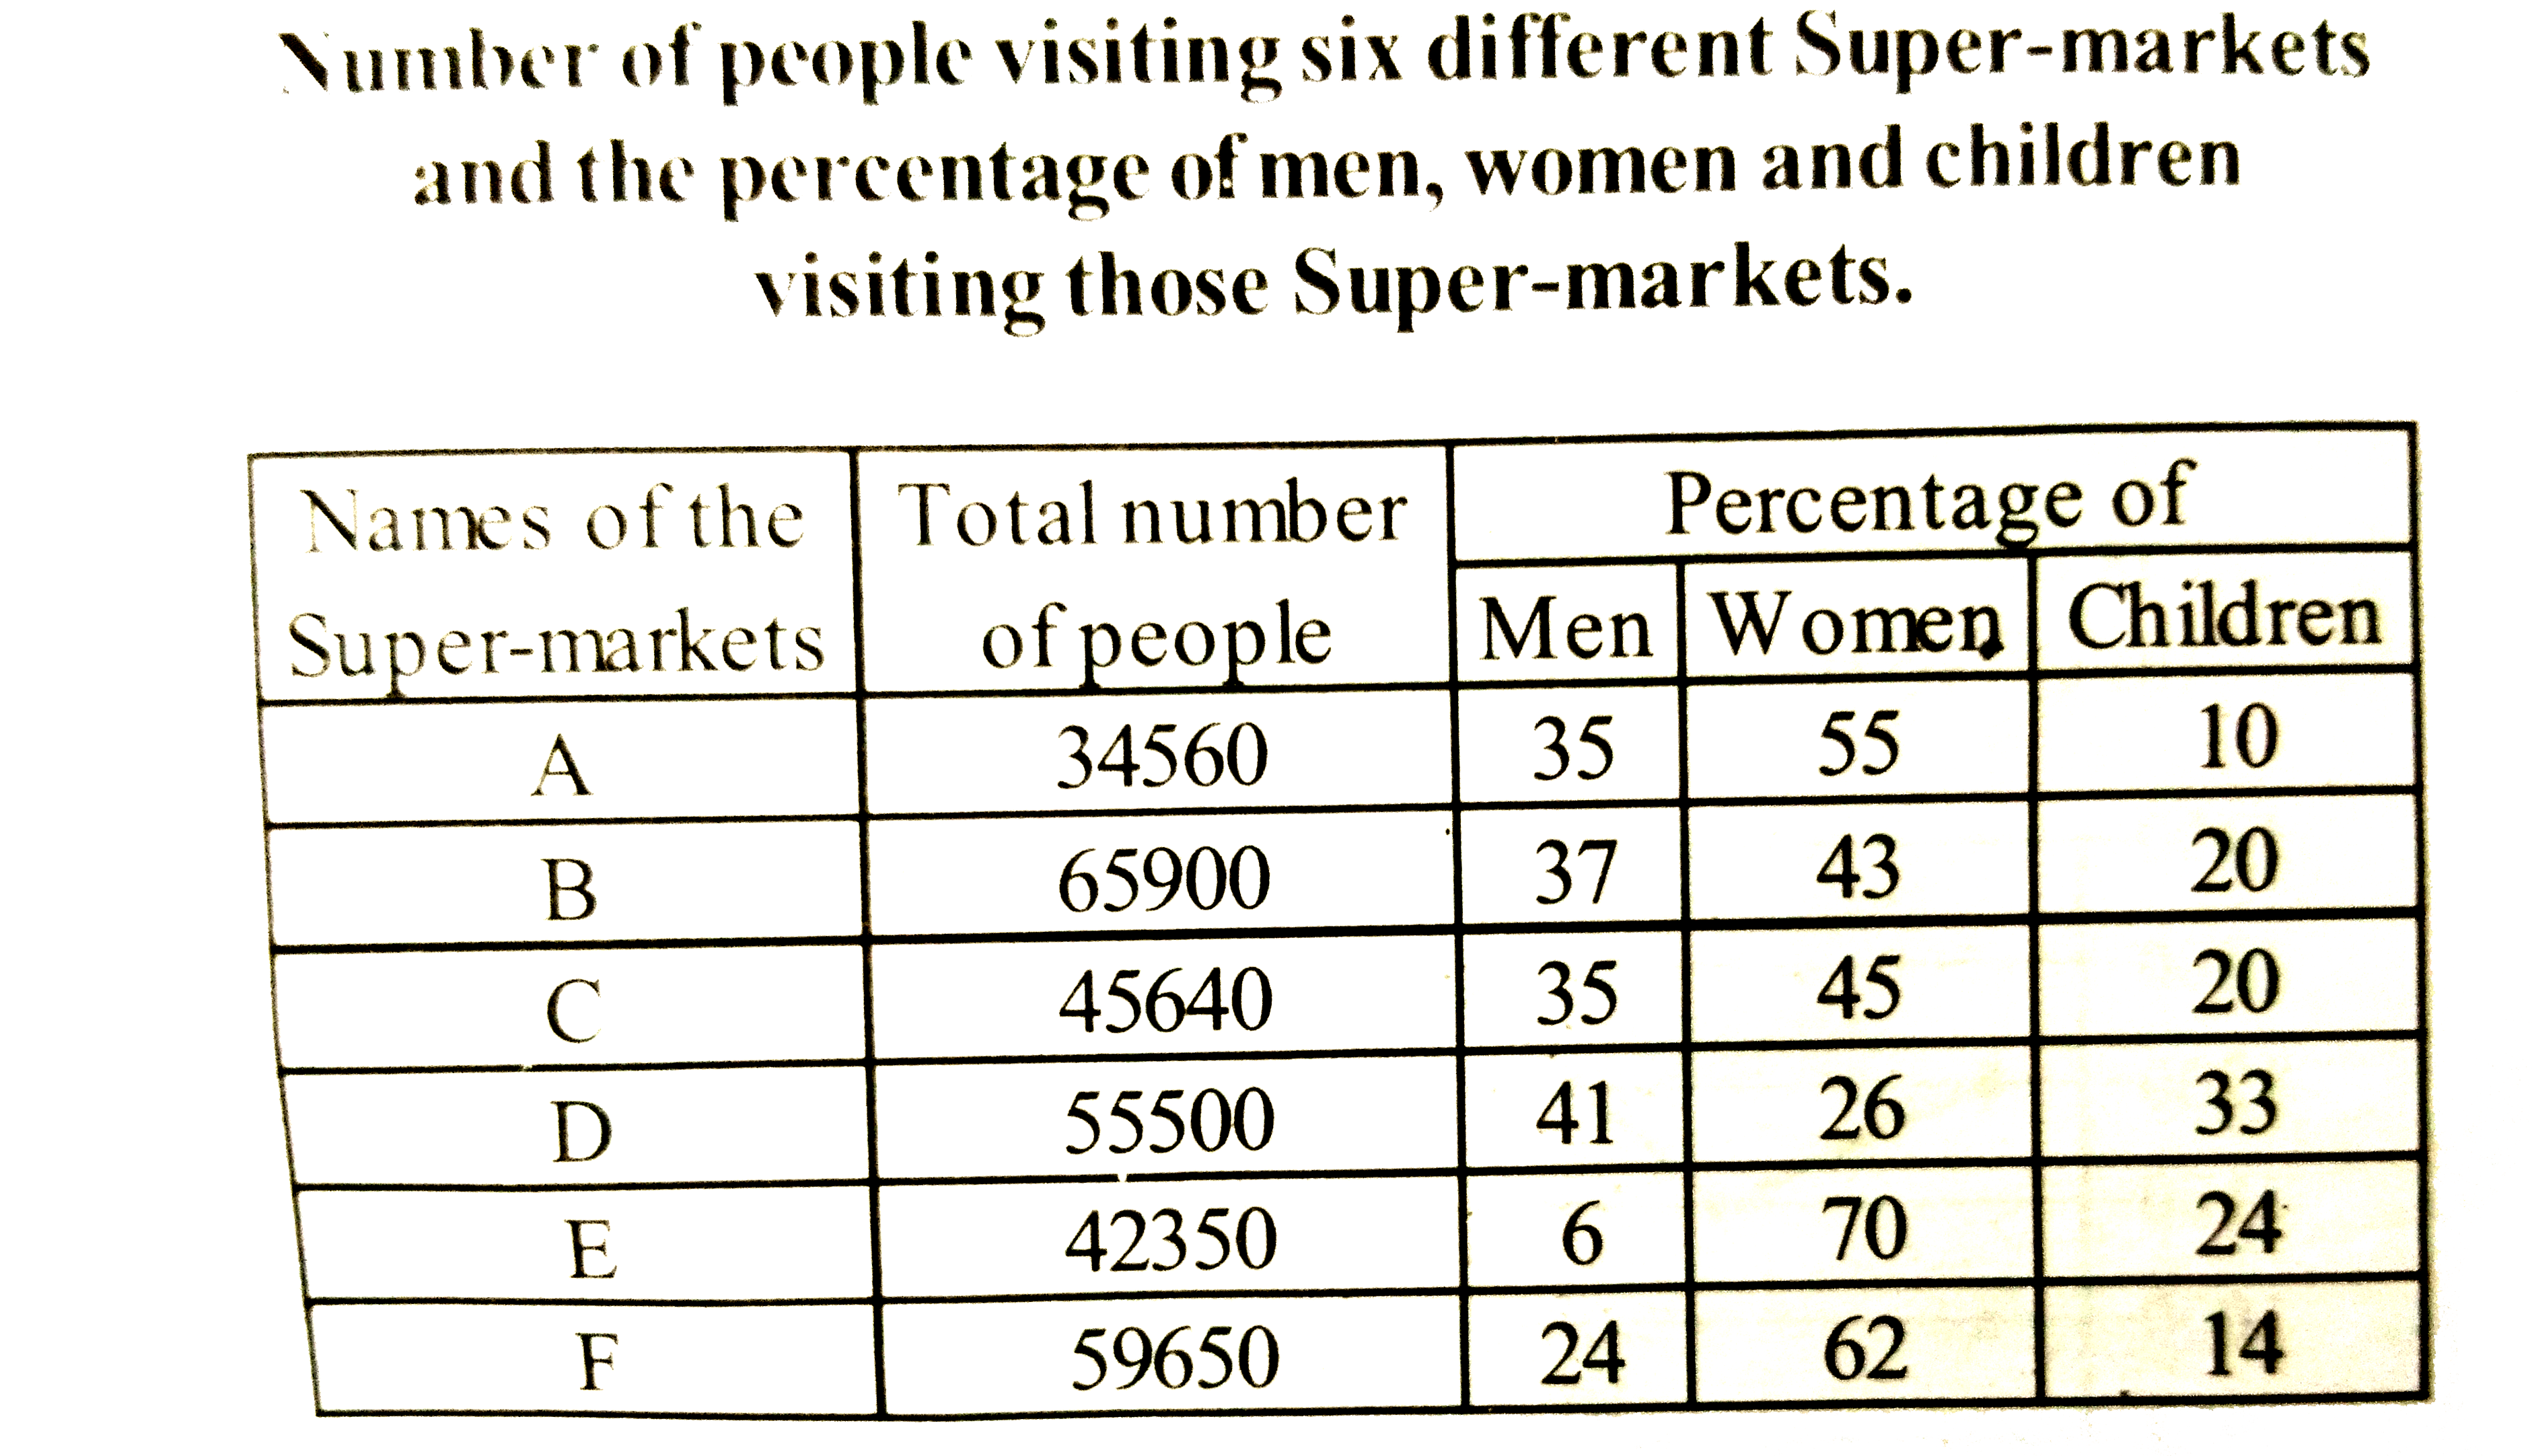 Number of children visiting Super-market C from what percet of number of children visiting super market F ? (rounded off to two digits after decimal)